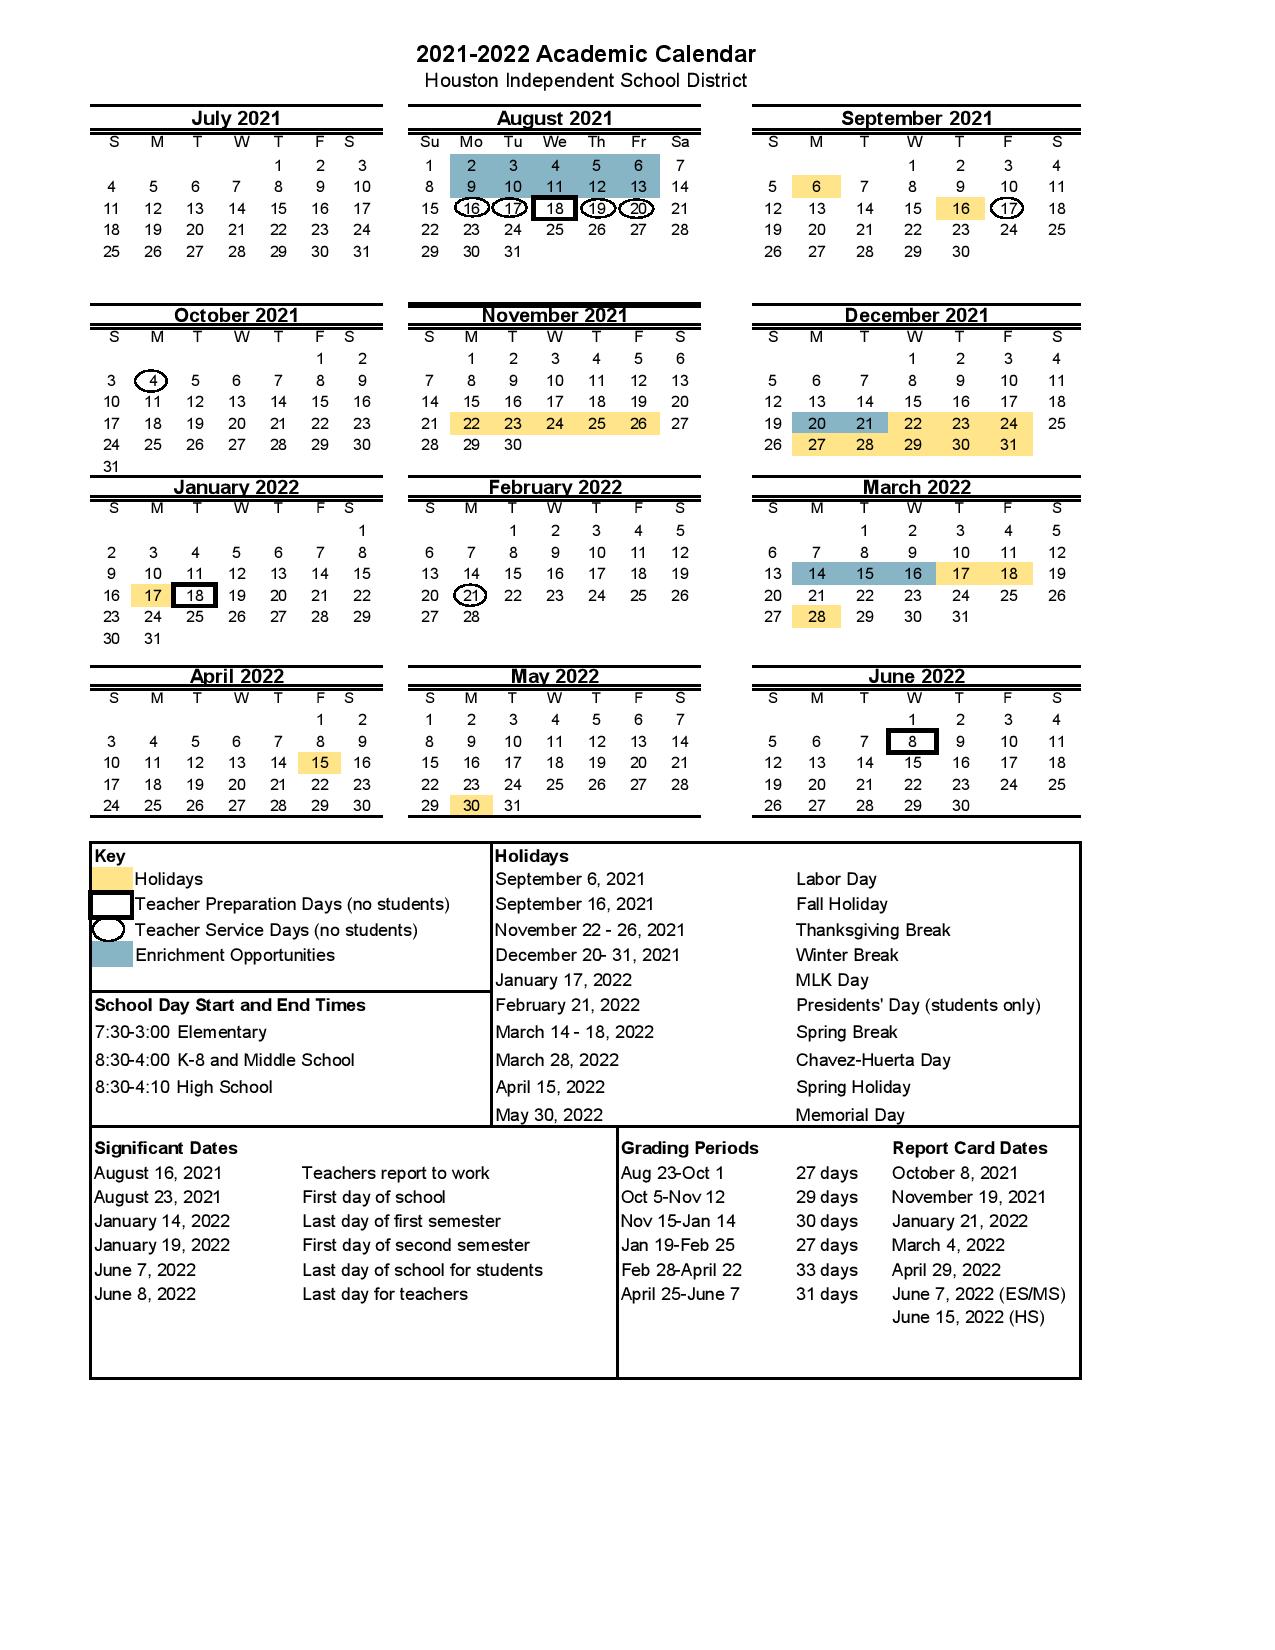 Hisd Calendar 2022 Houston Independent School District Calendar 2021-2022